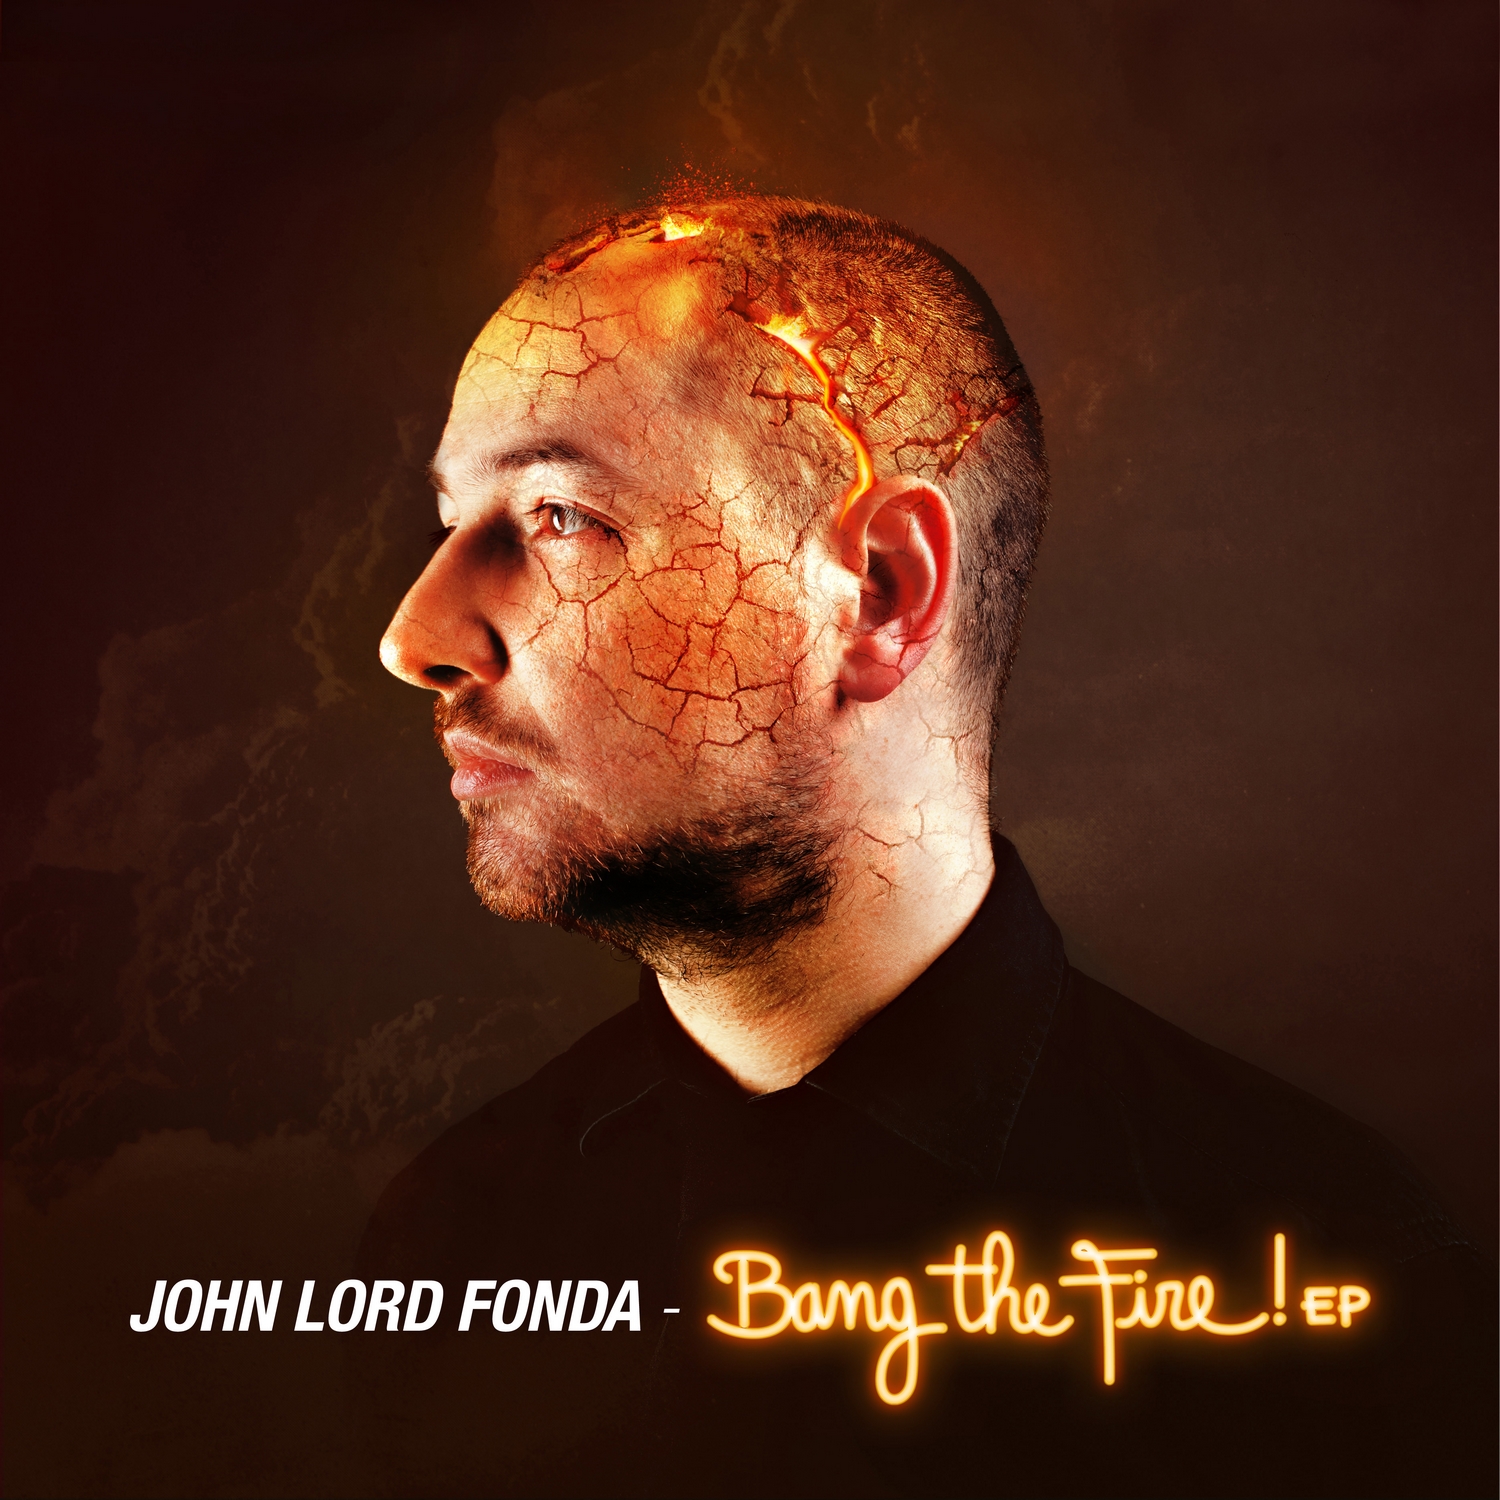 John Lord Fonda - Bang the fire EP